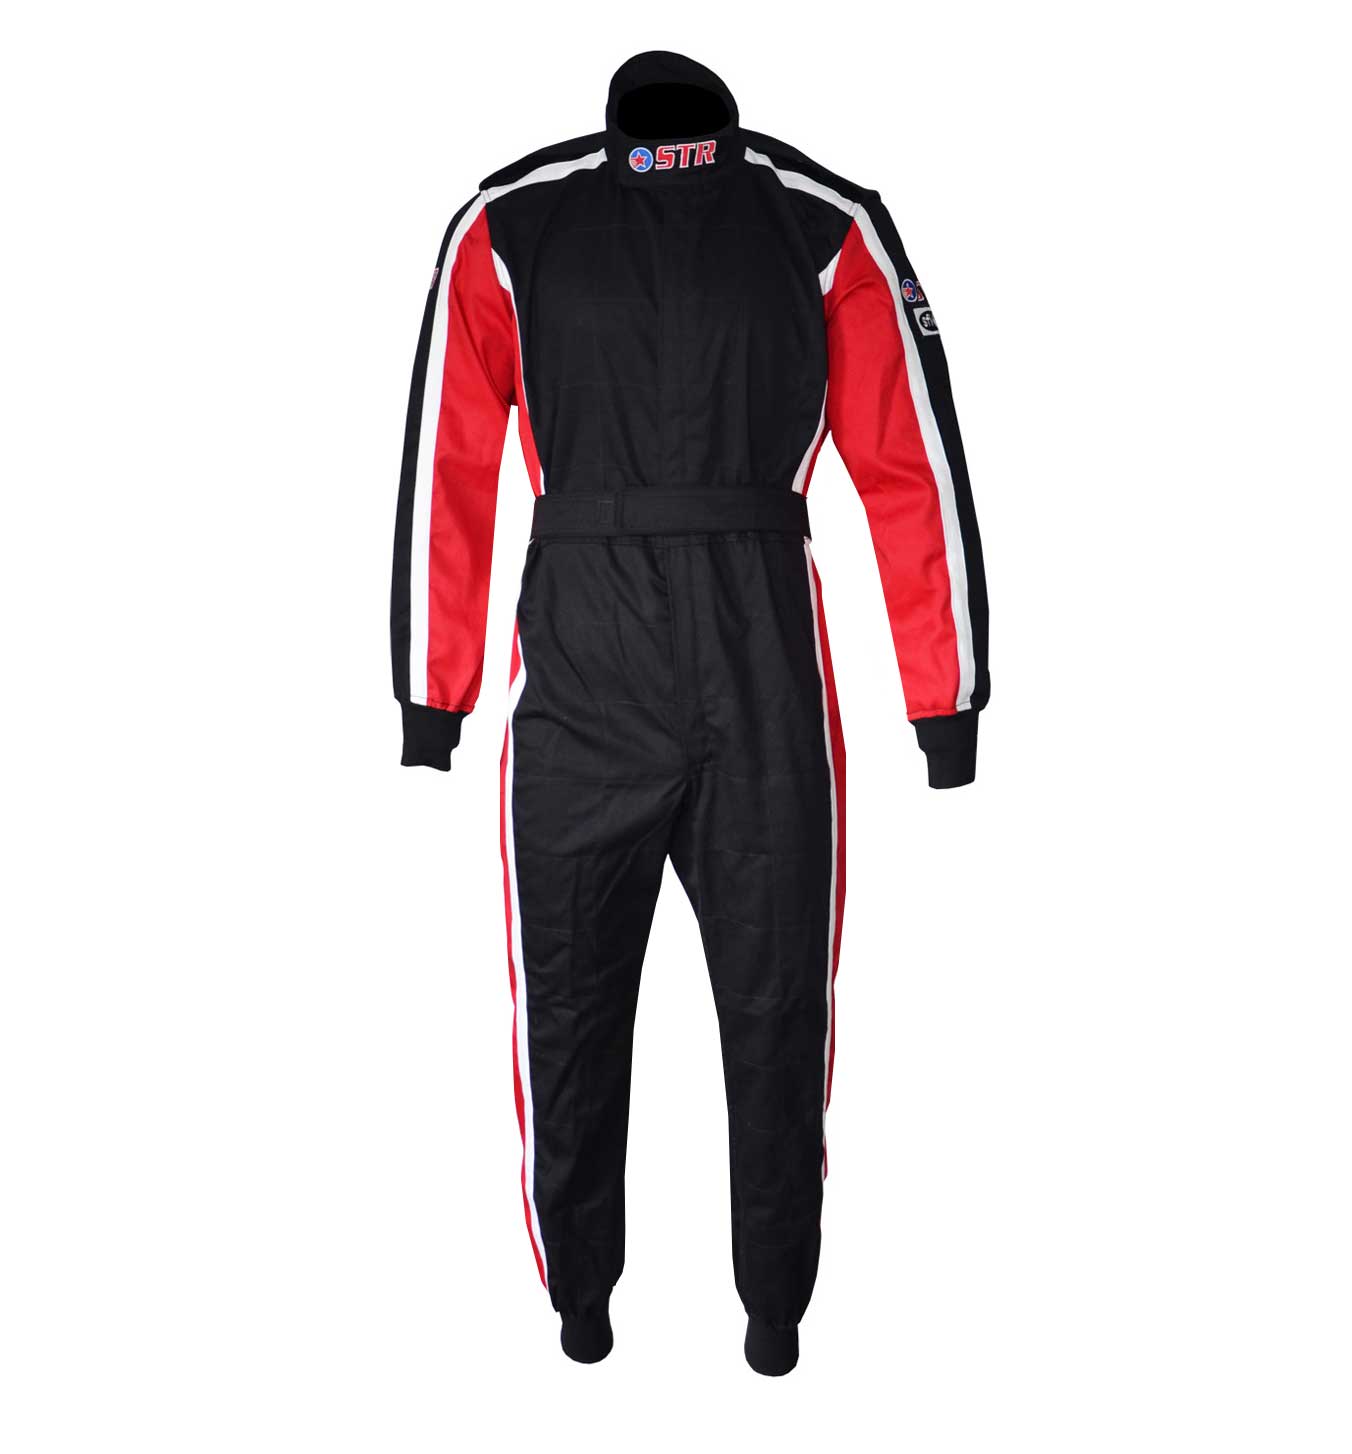 STR 'Evo Pro' Race Suit - Black/White/Red